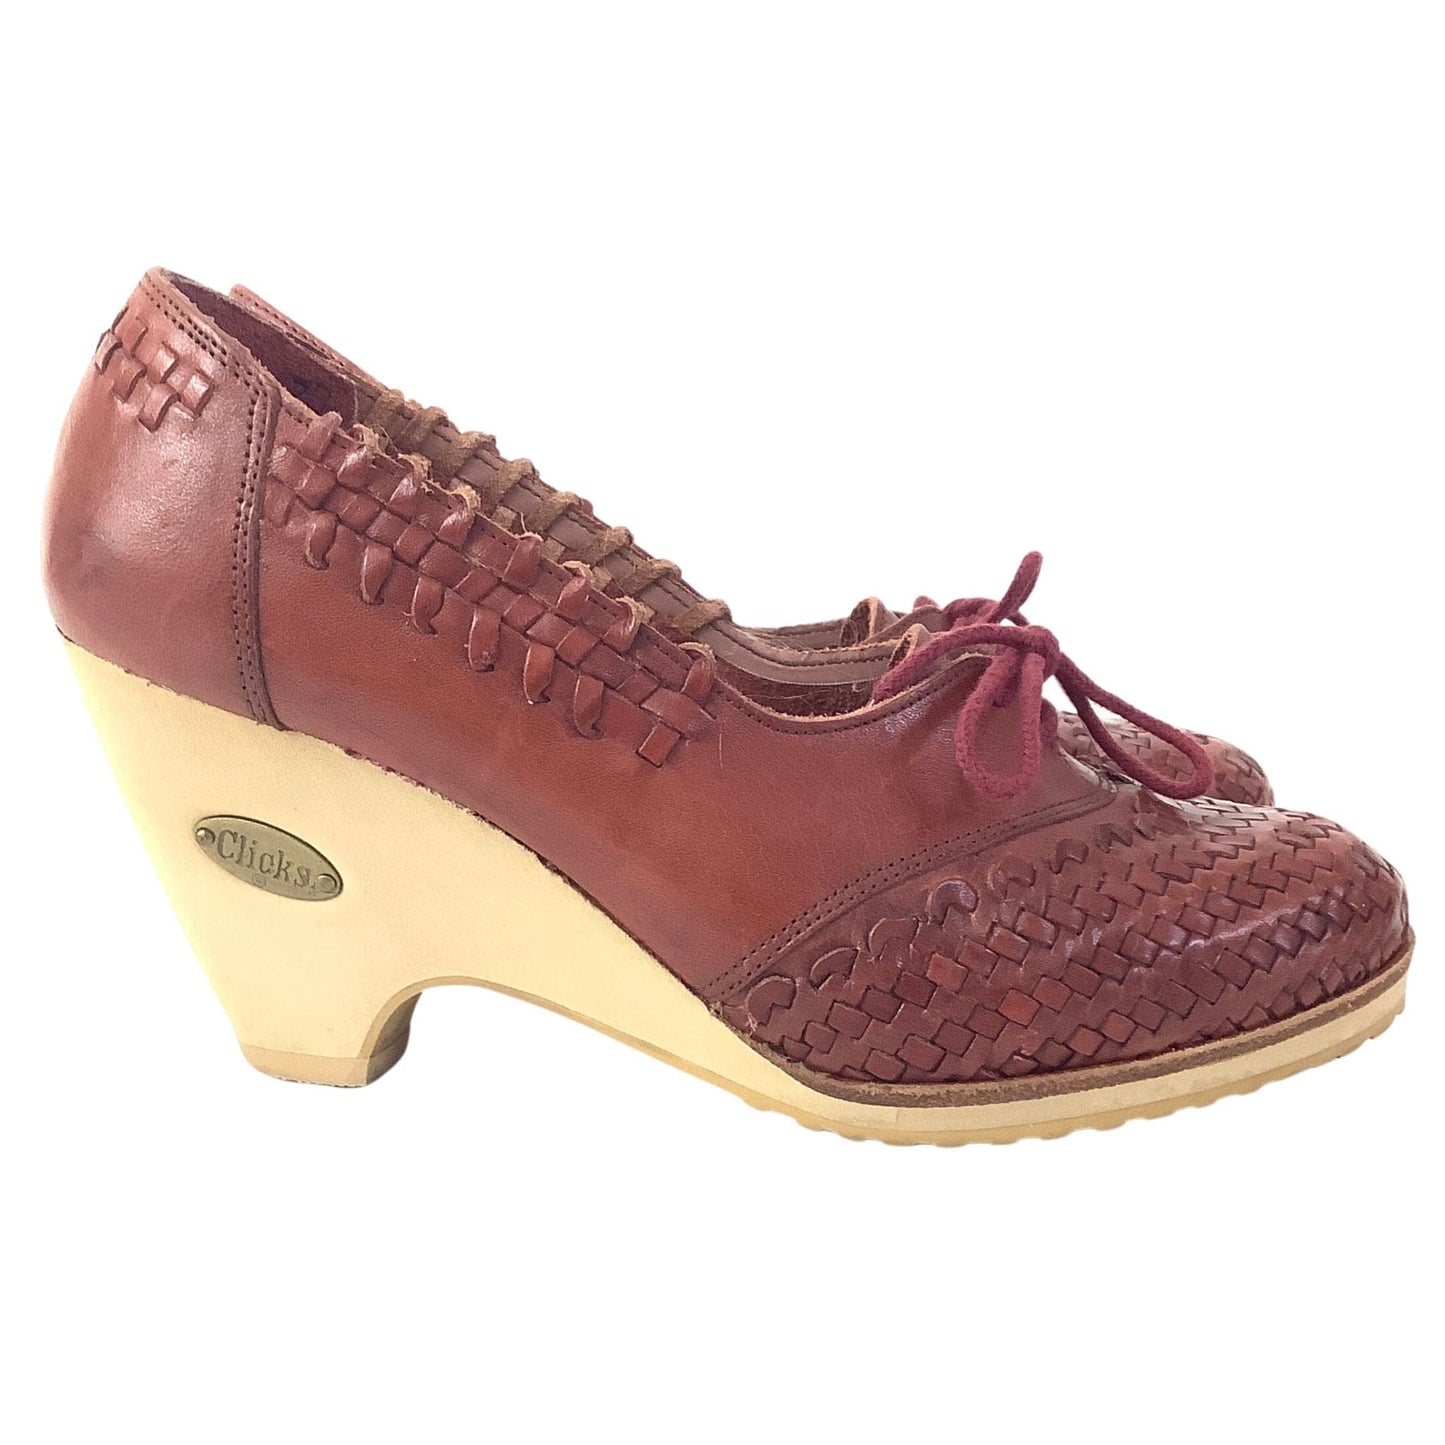 Vintage Woven Leather Shoes 7 / Burgundy / Vintage 1980s